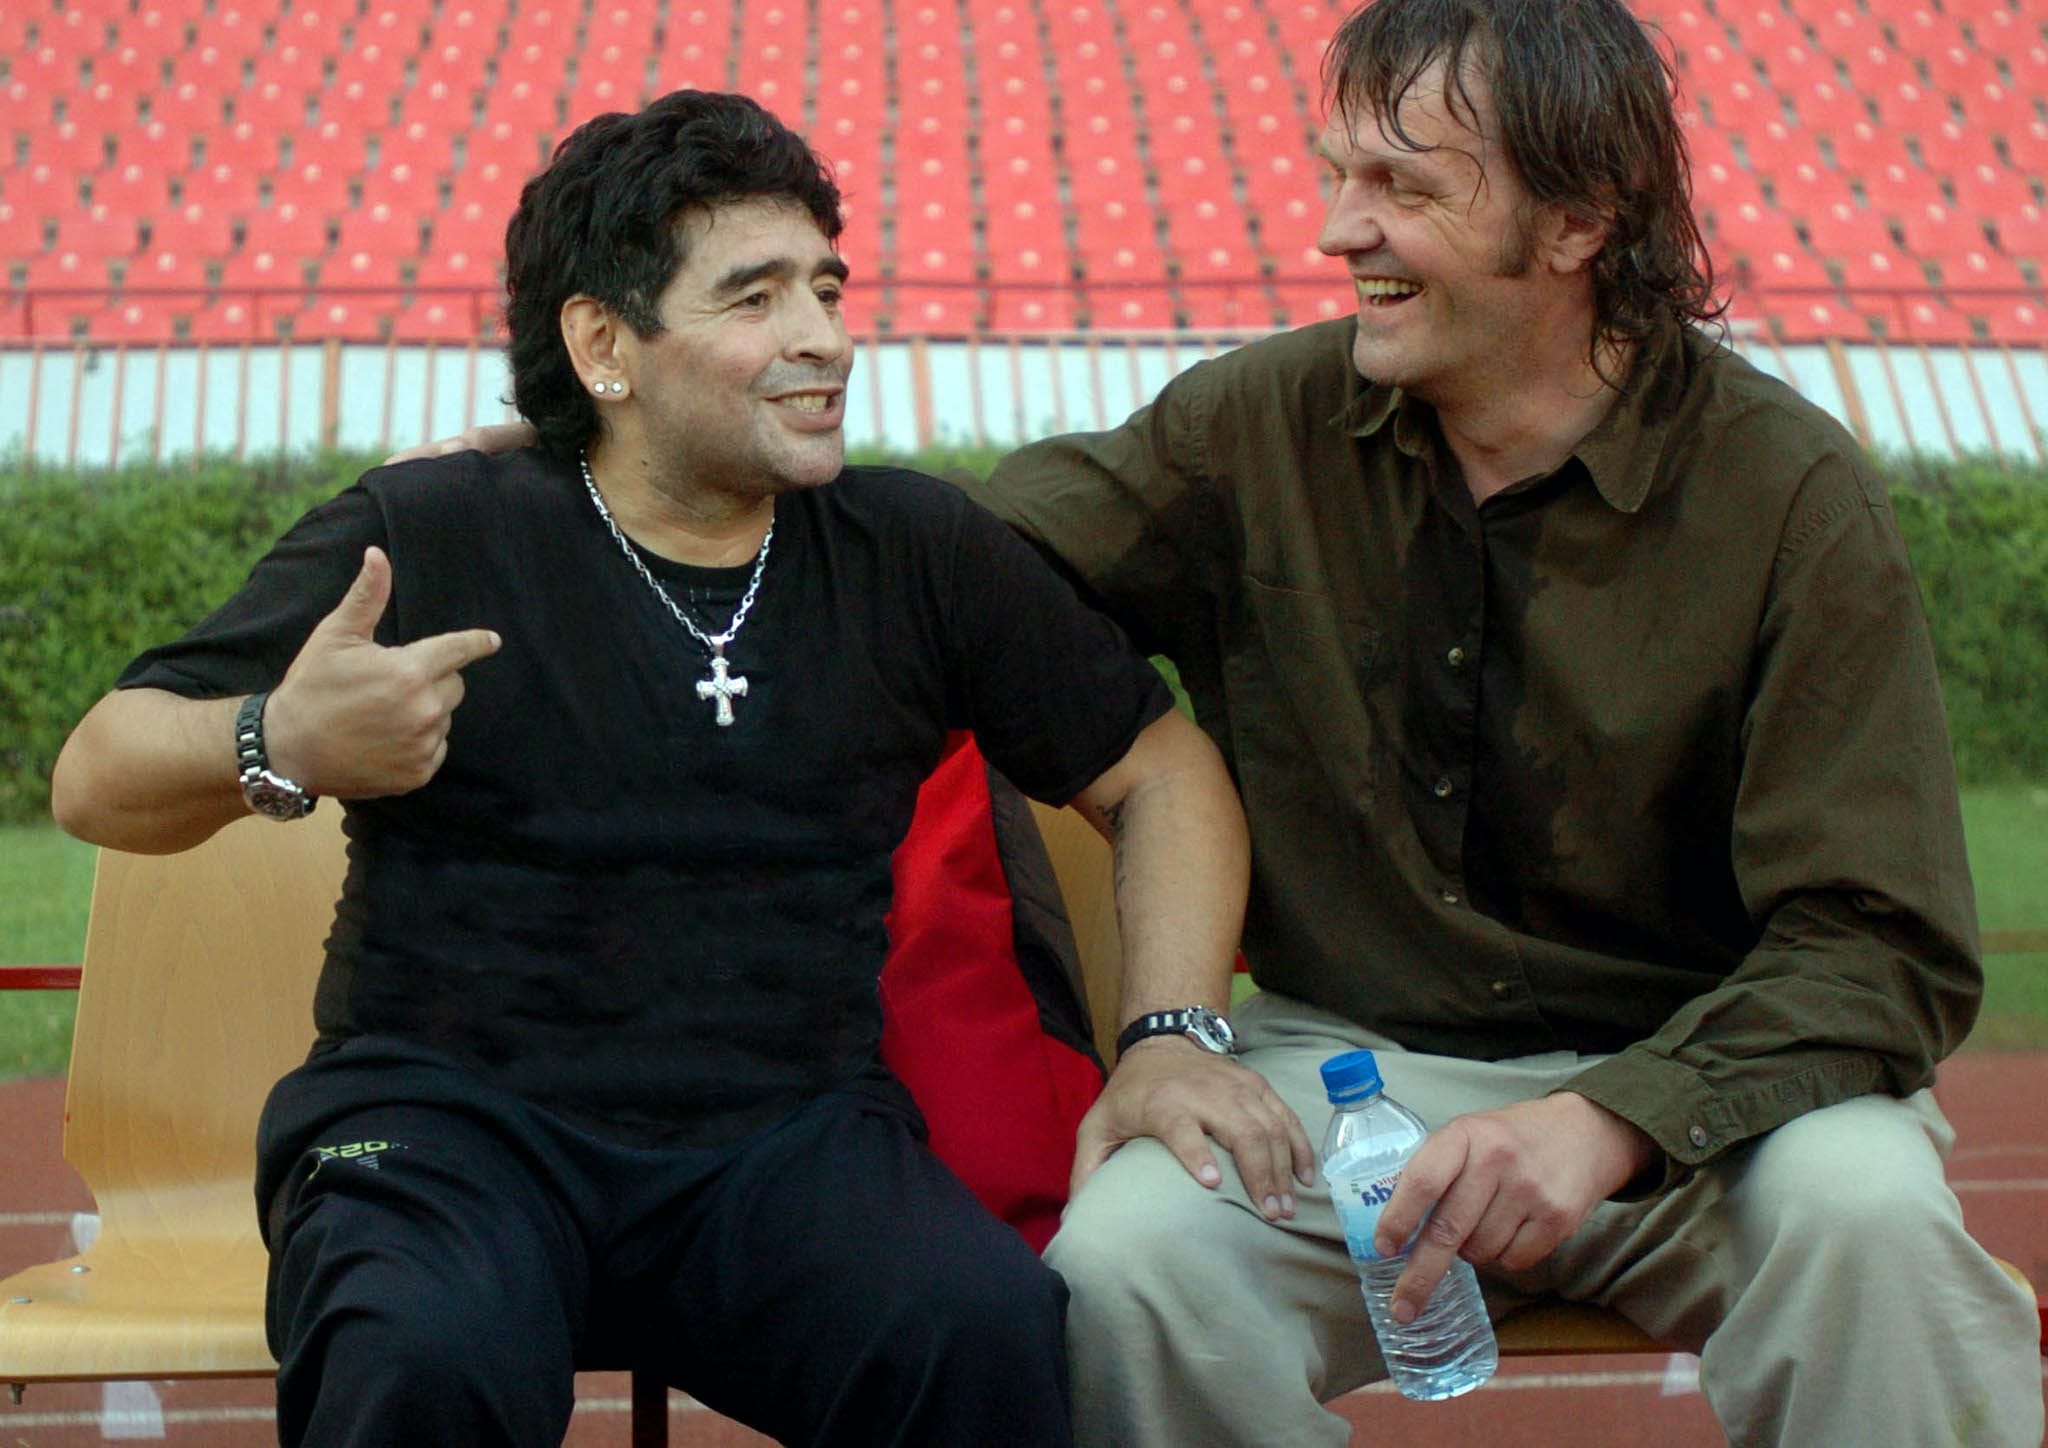 Maradona par Kusturica d'Emir Kusturica image documentaire